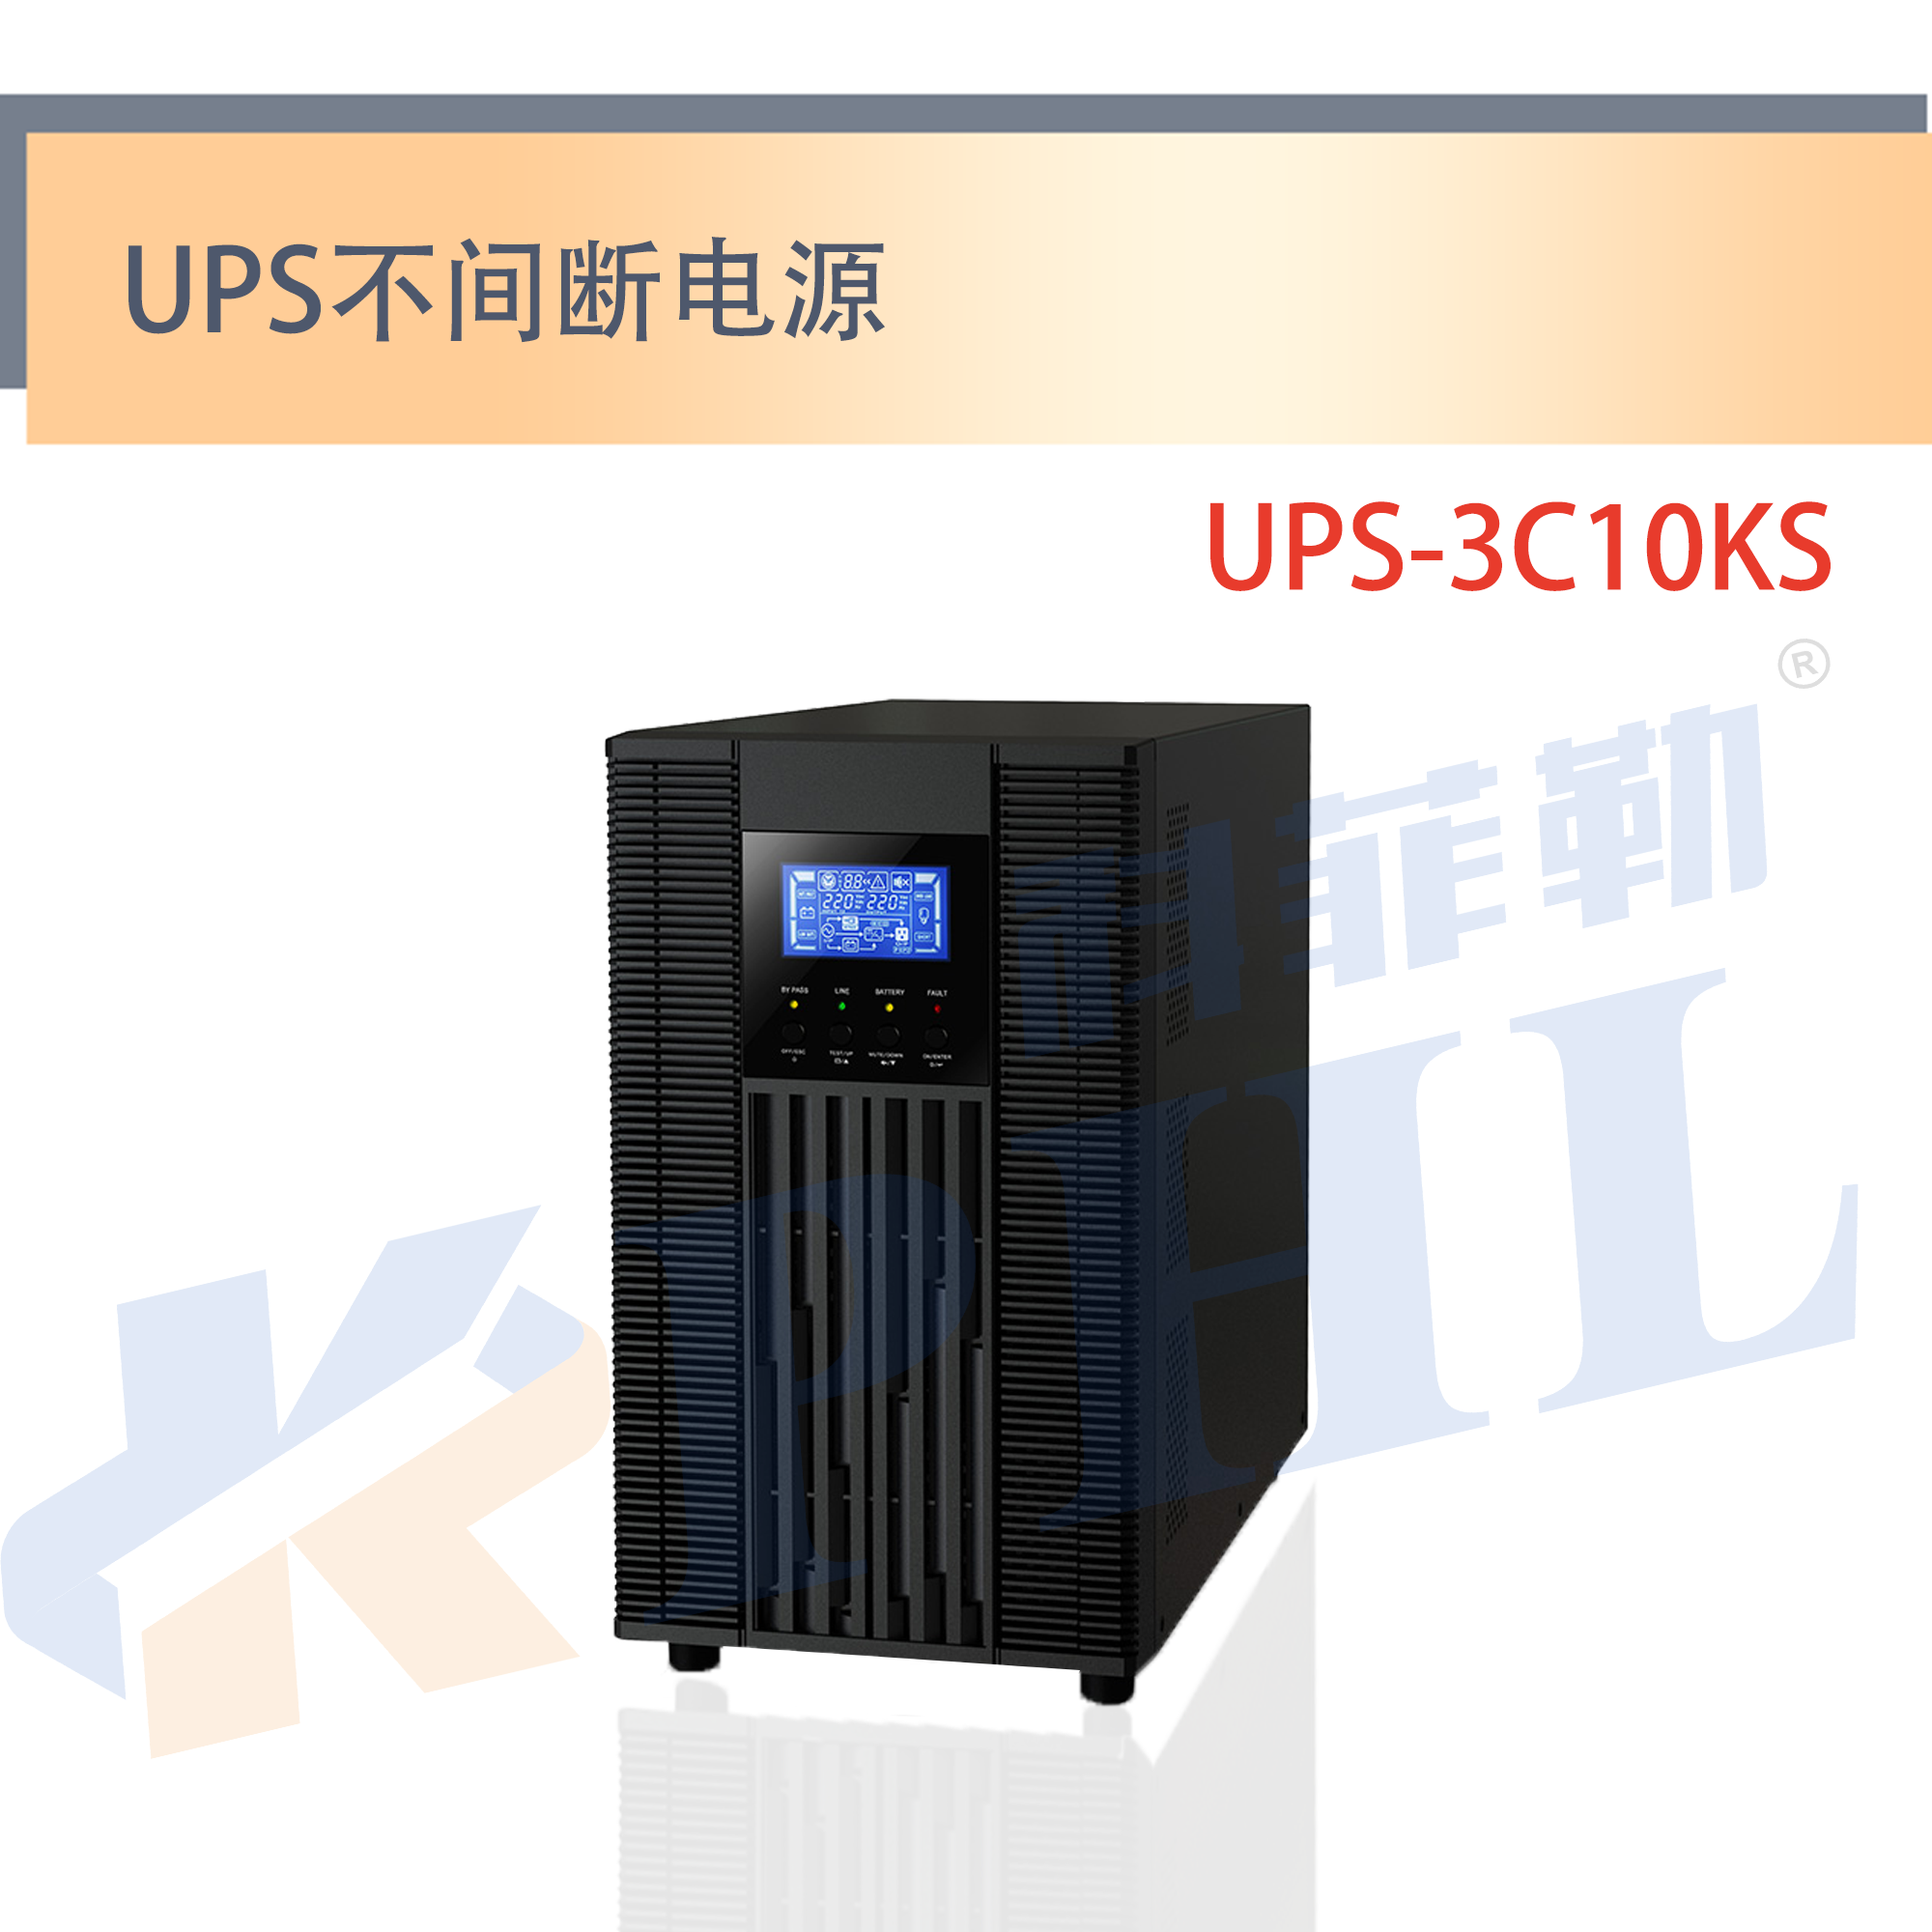 UPS-3C10KS